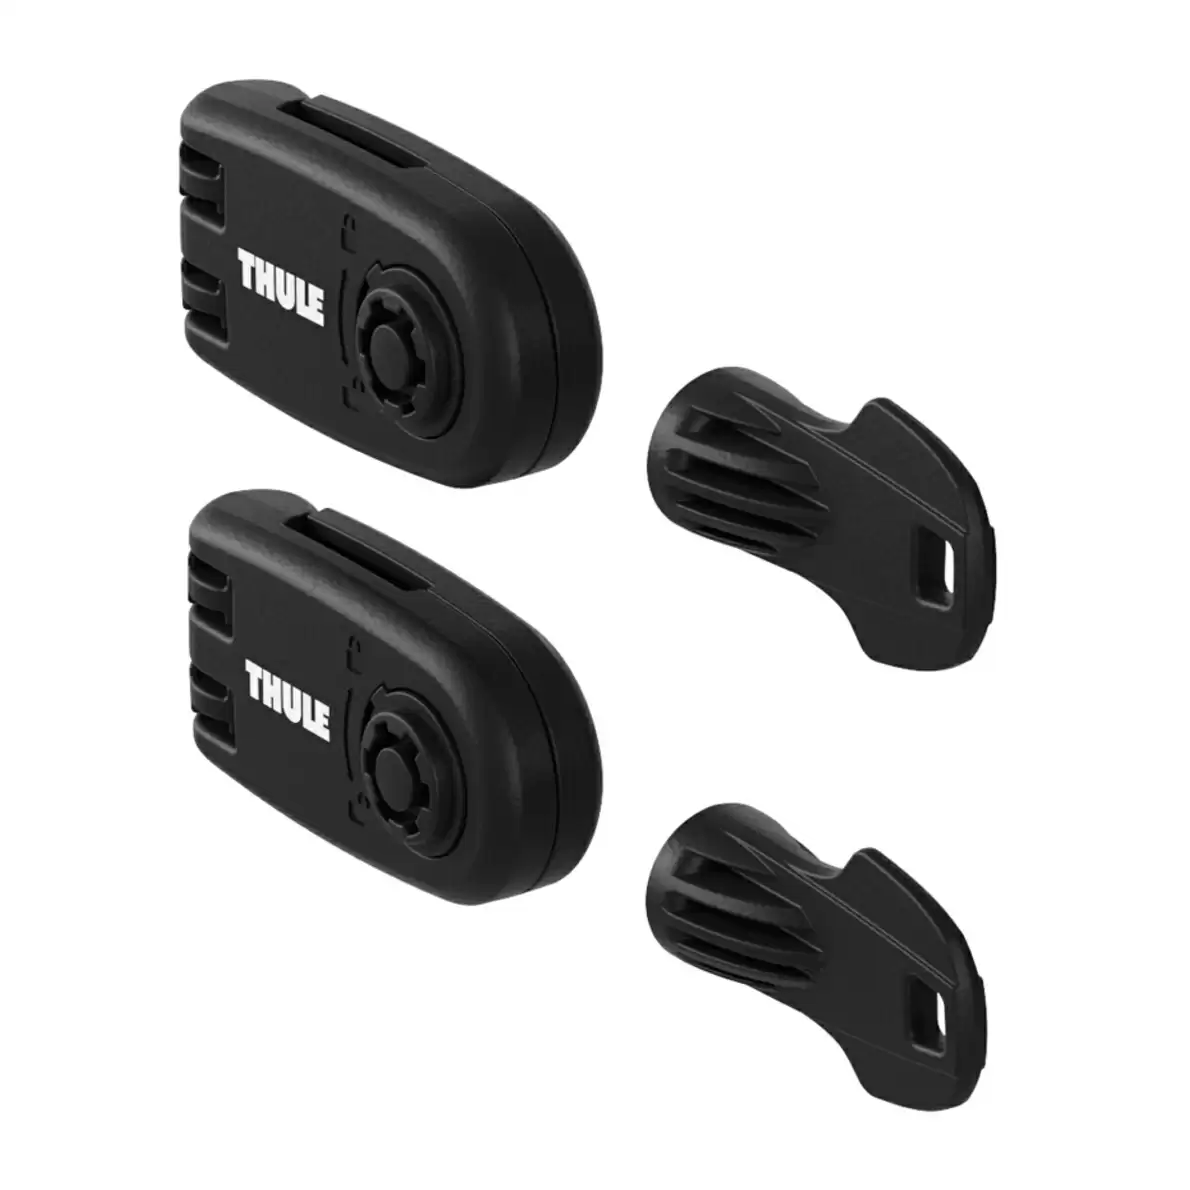 Safety Wheel Kit Strap Locks for locking bike carrier belts - image